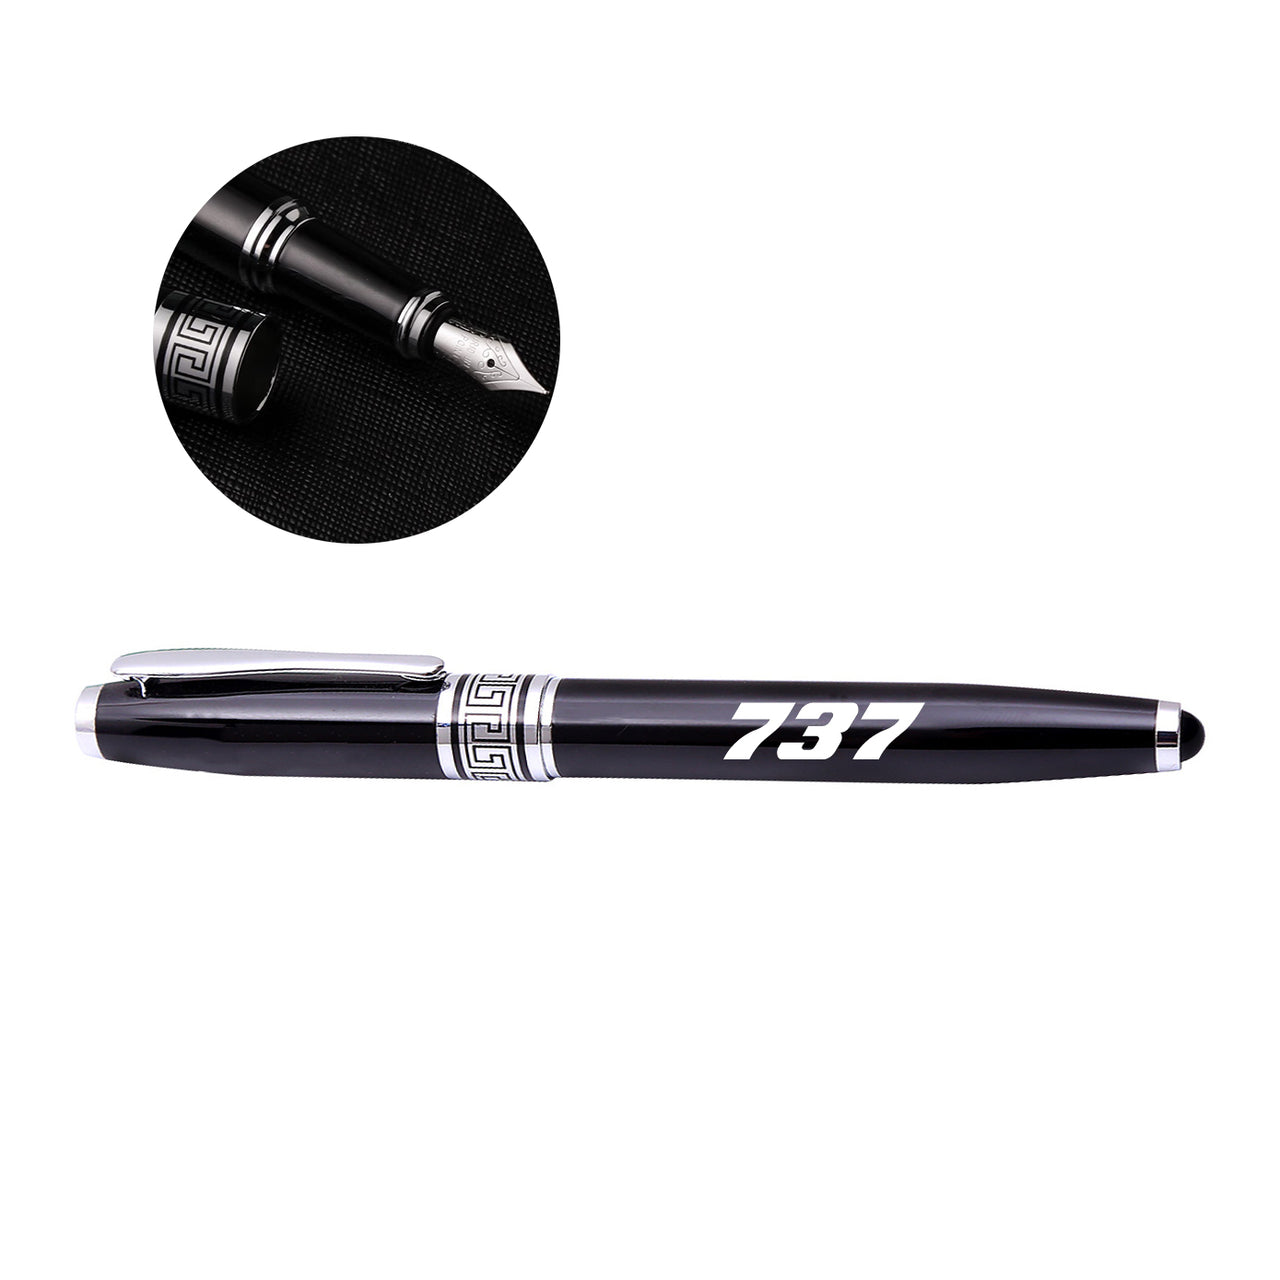 737 Flat Text Designed Pens